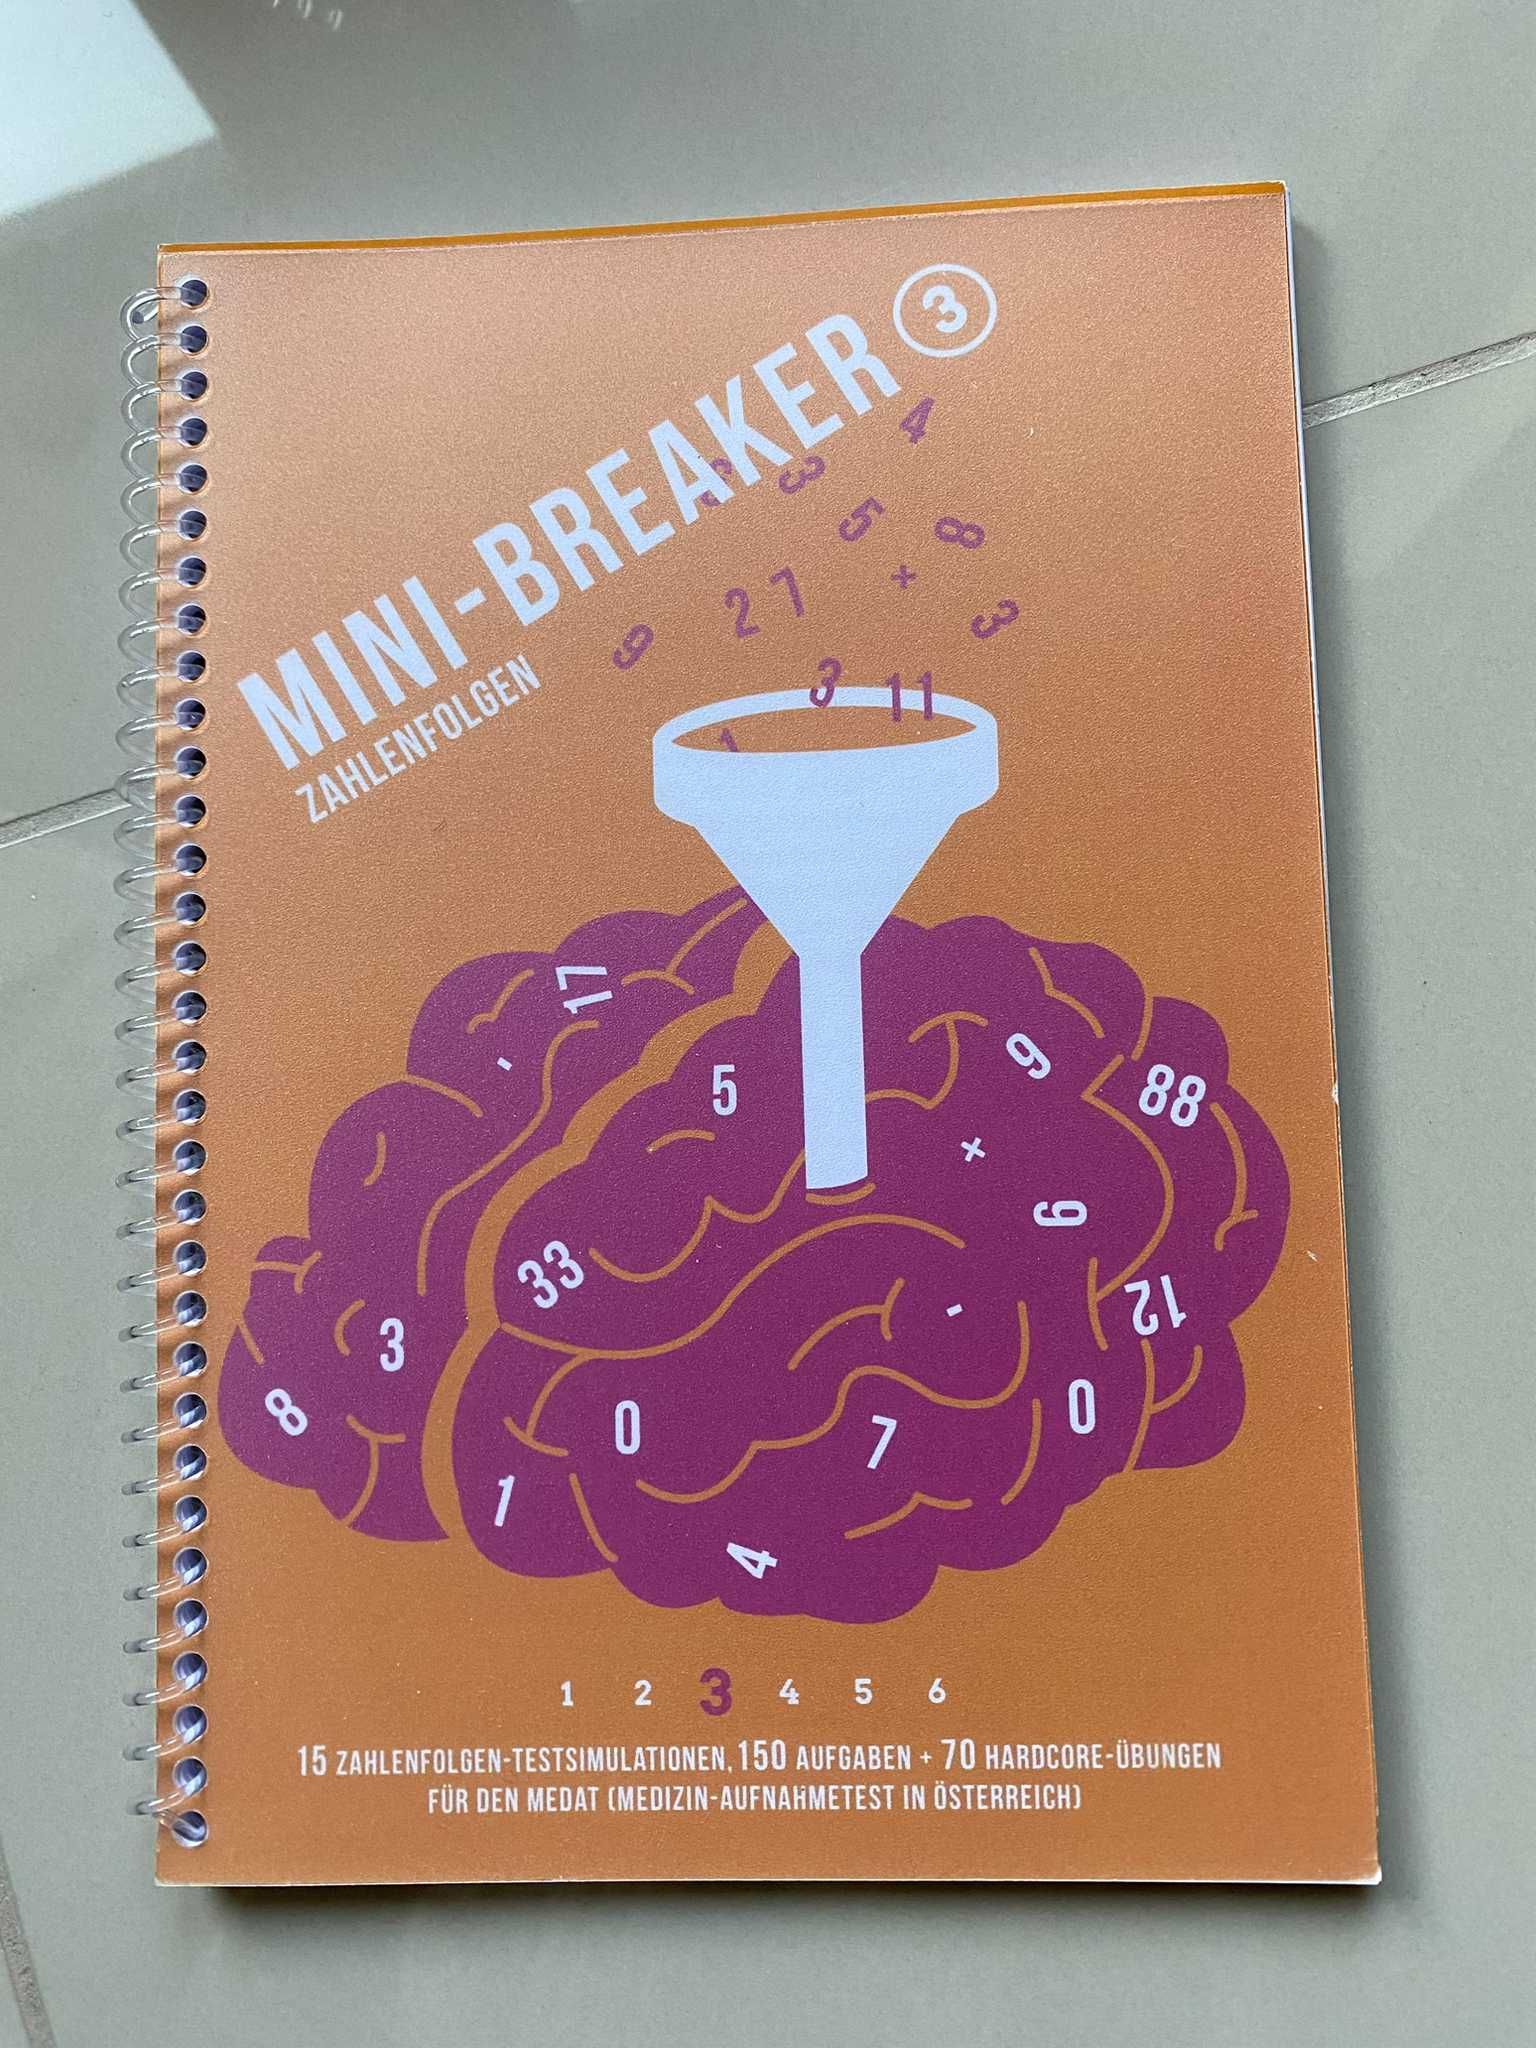 Mini-Breaker 3 - Carte admitere medicina Austria MEDAT